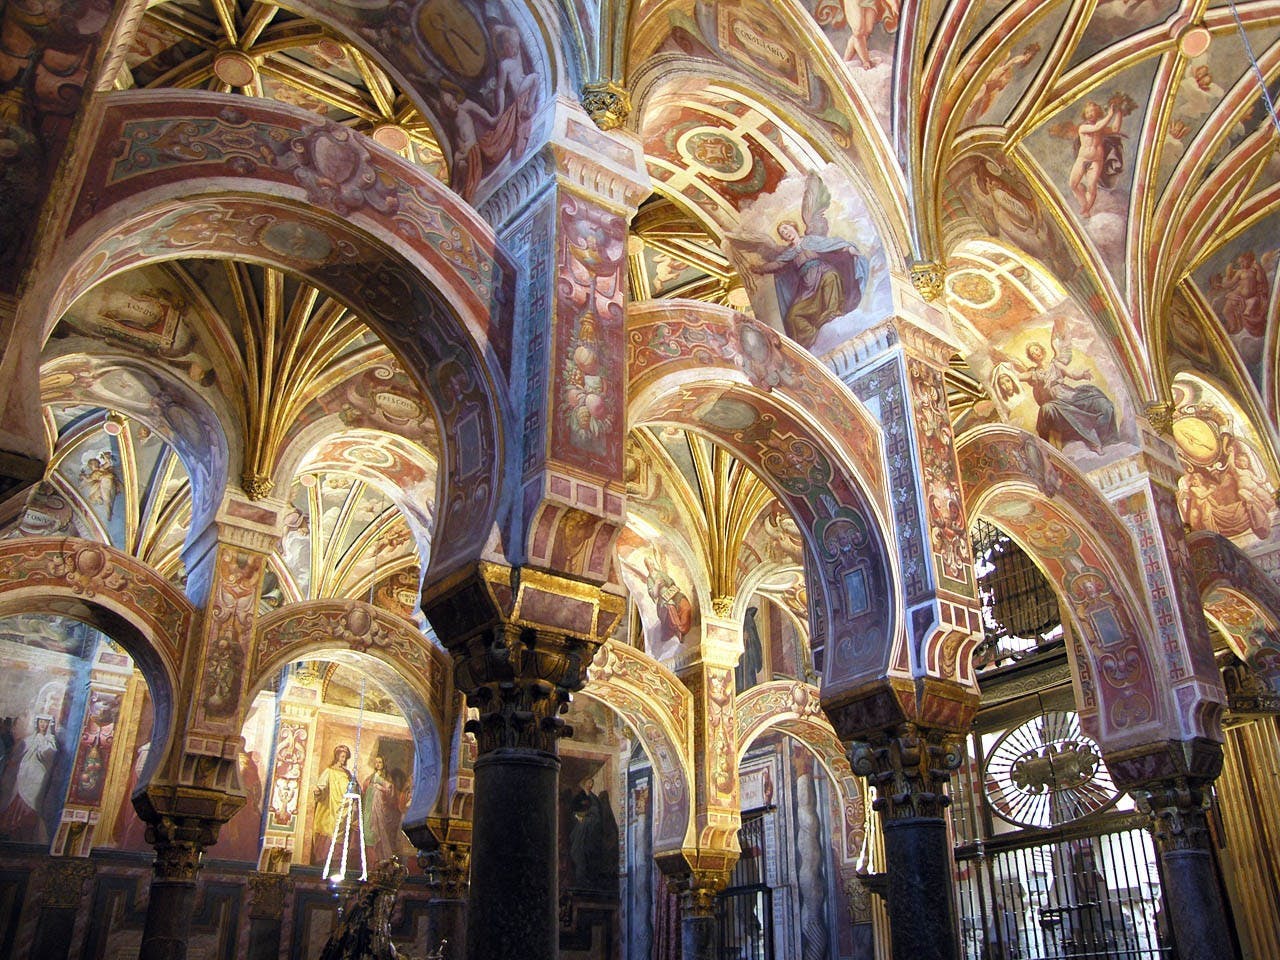 Visita guiada oficial a la Mezquita-Catedral, la Sinagoga y el Alcázar de Córdoba